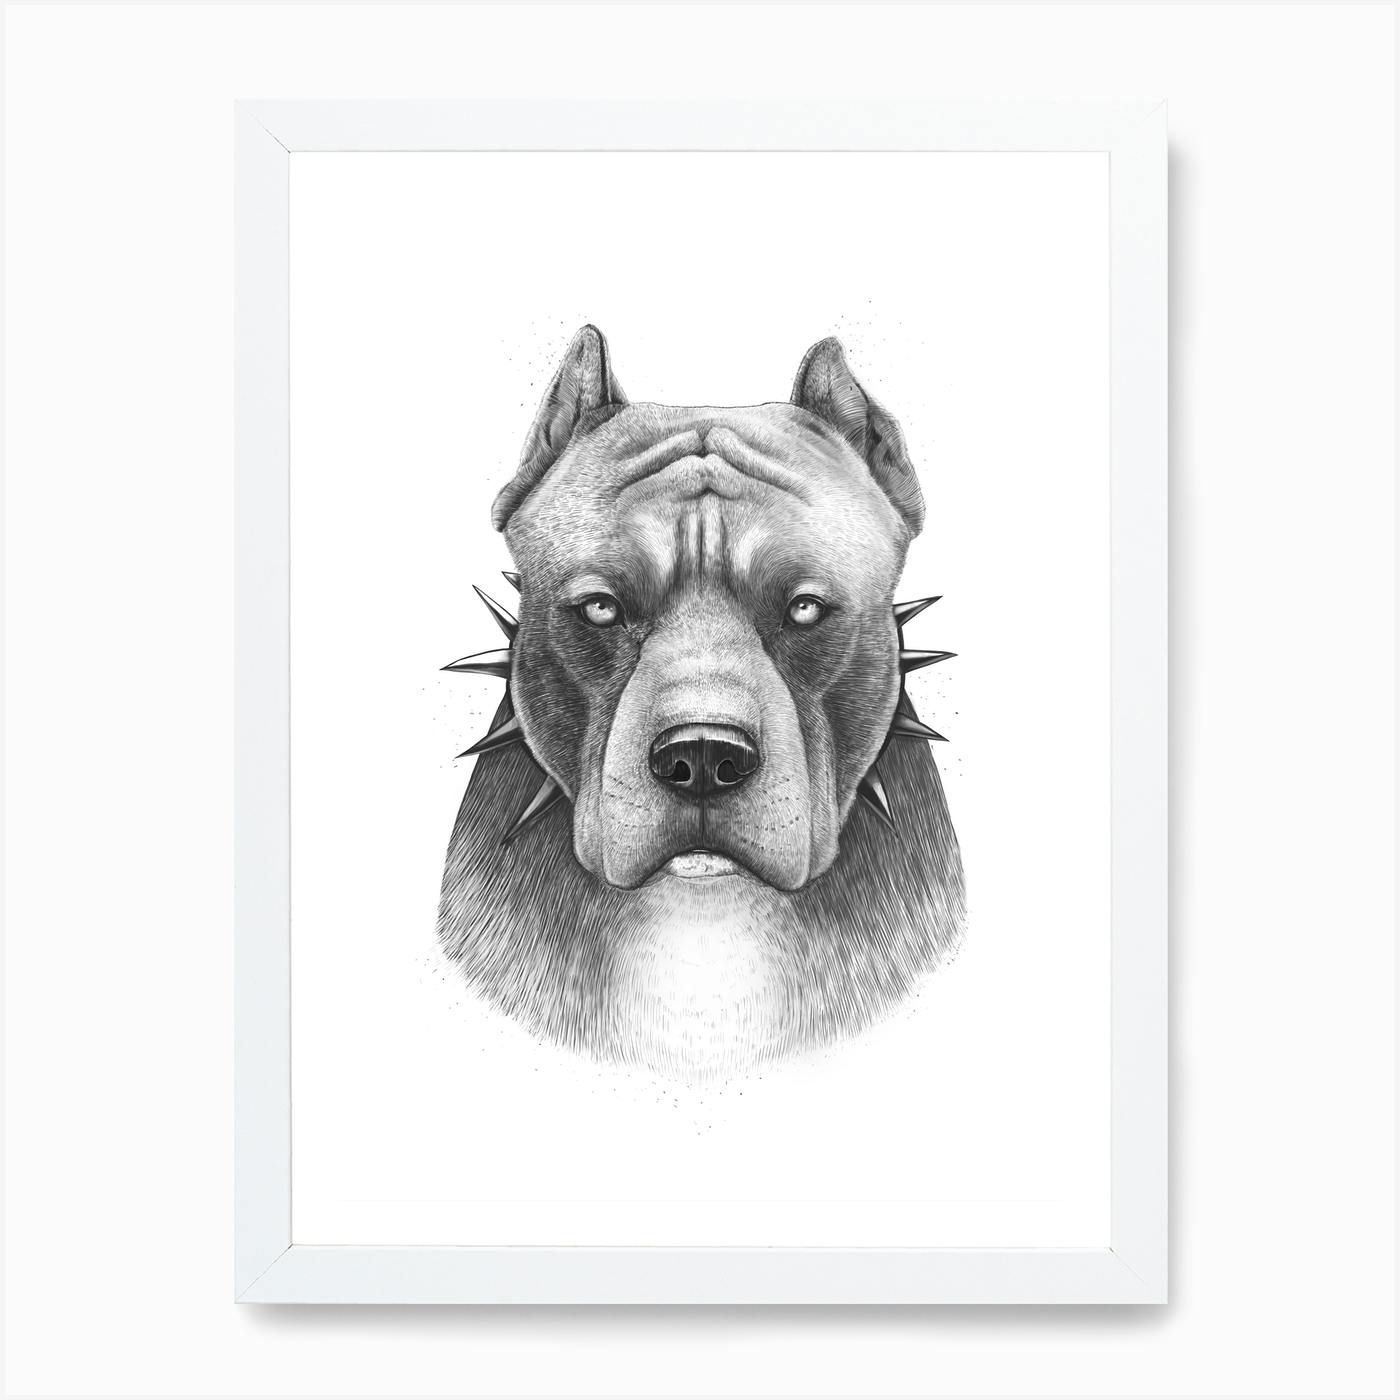 A1 Blue American Pit Bull Terrier Poster Art Print 60 x 90cm 180gsm Gift #15535